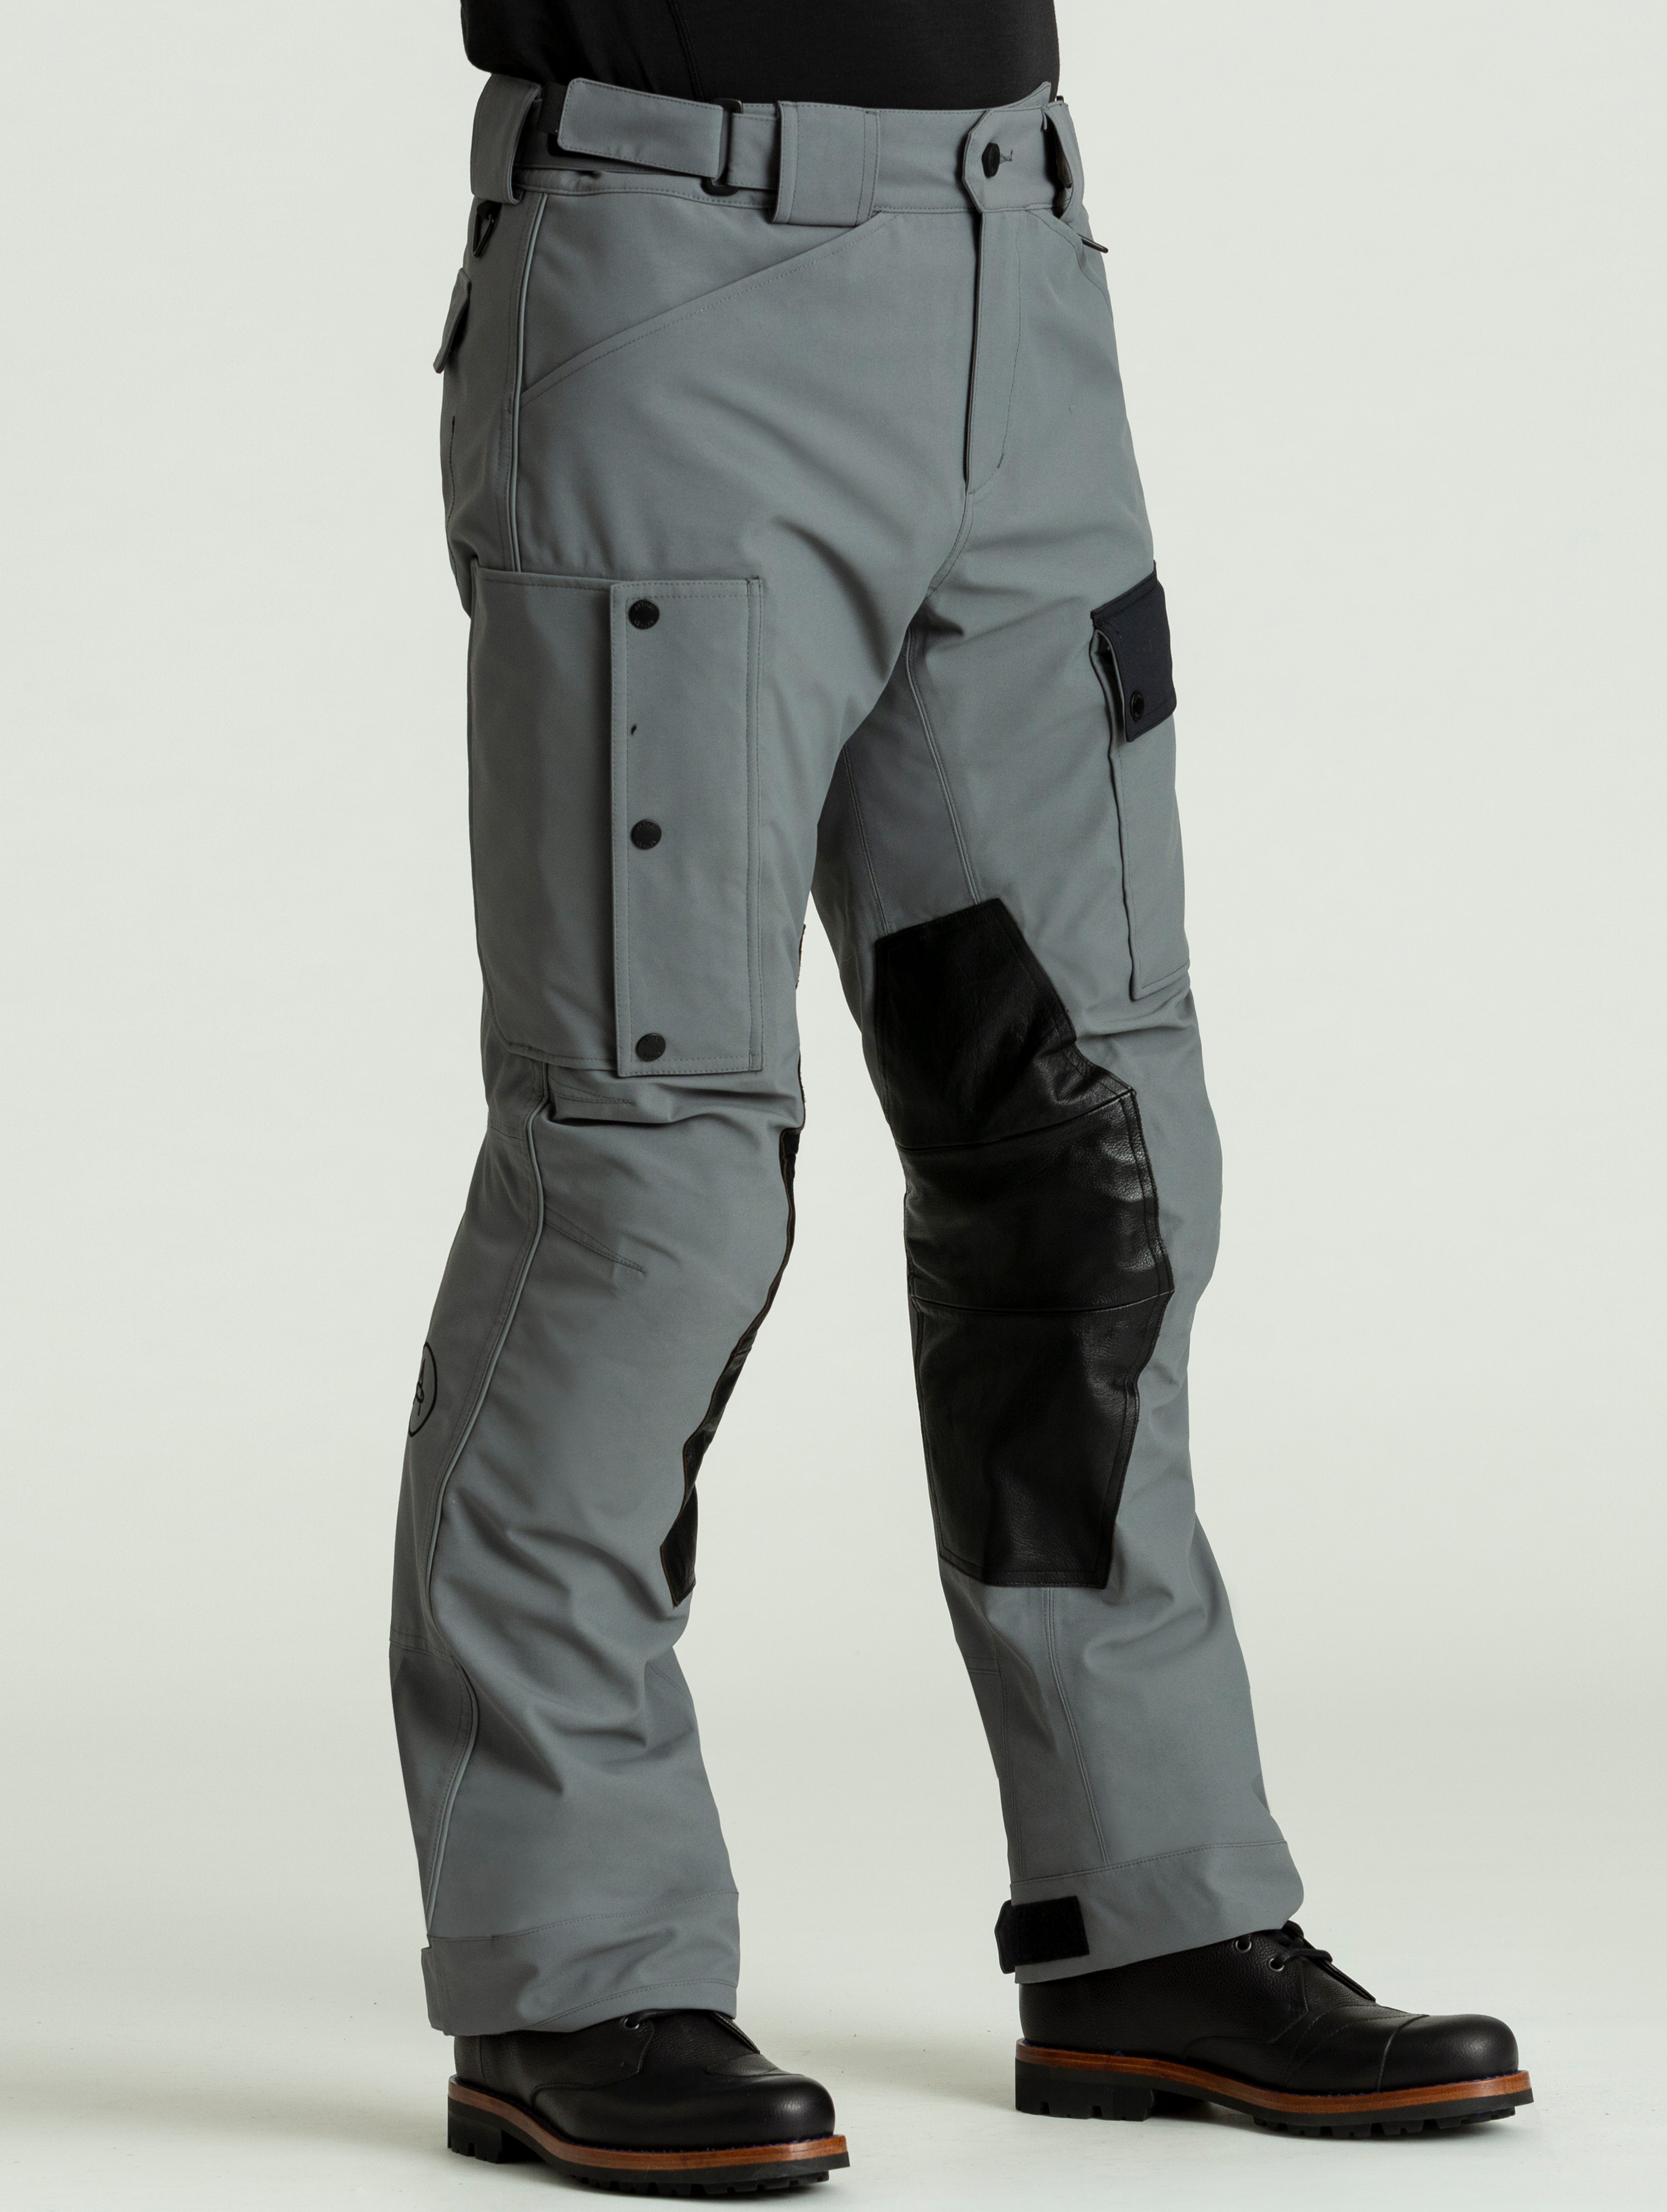 Aether Skinny Leg Pants - Black, 9.25 Rise Pants, Clothing